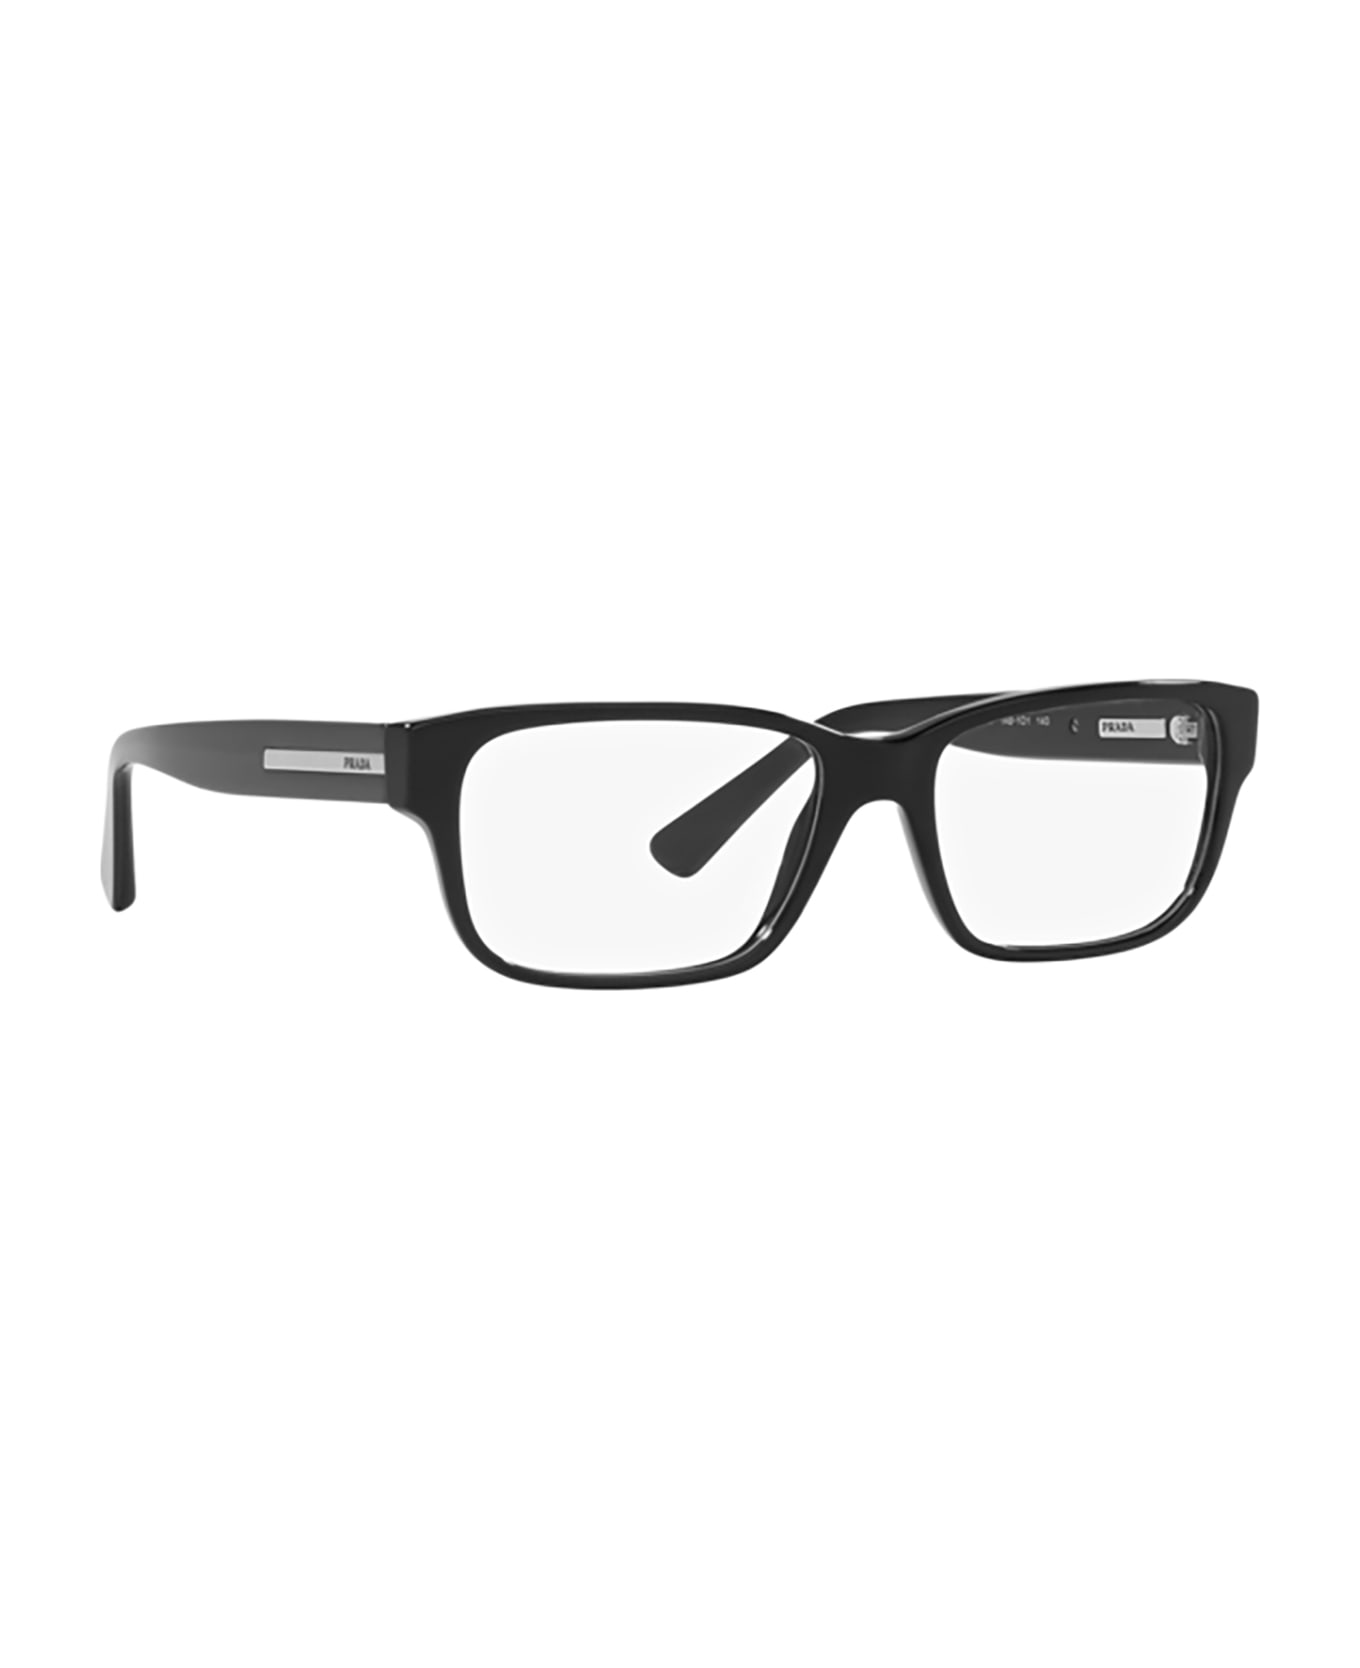 Prada Eyewear Pr 18zv Black Glasses - Black